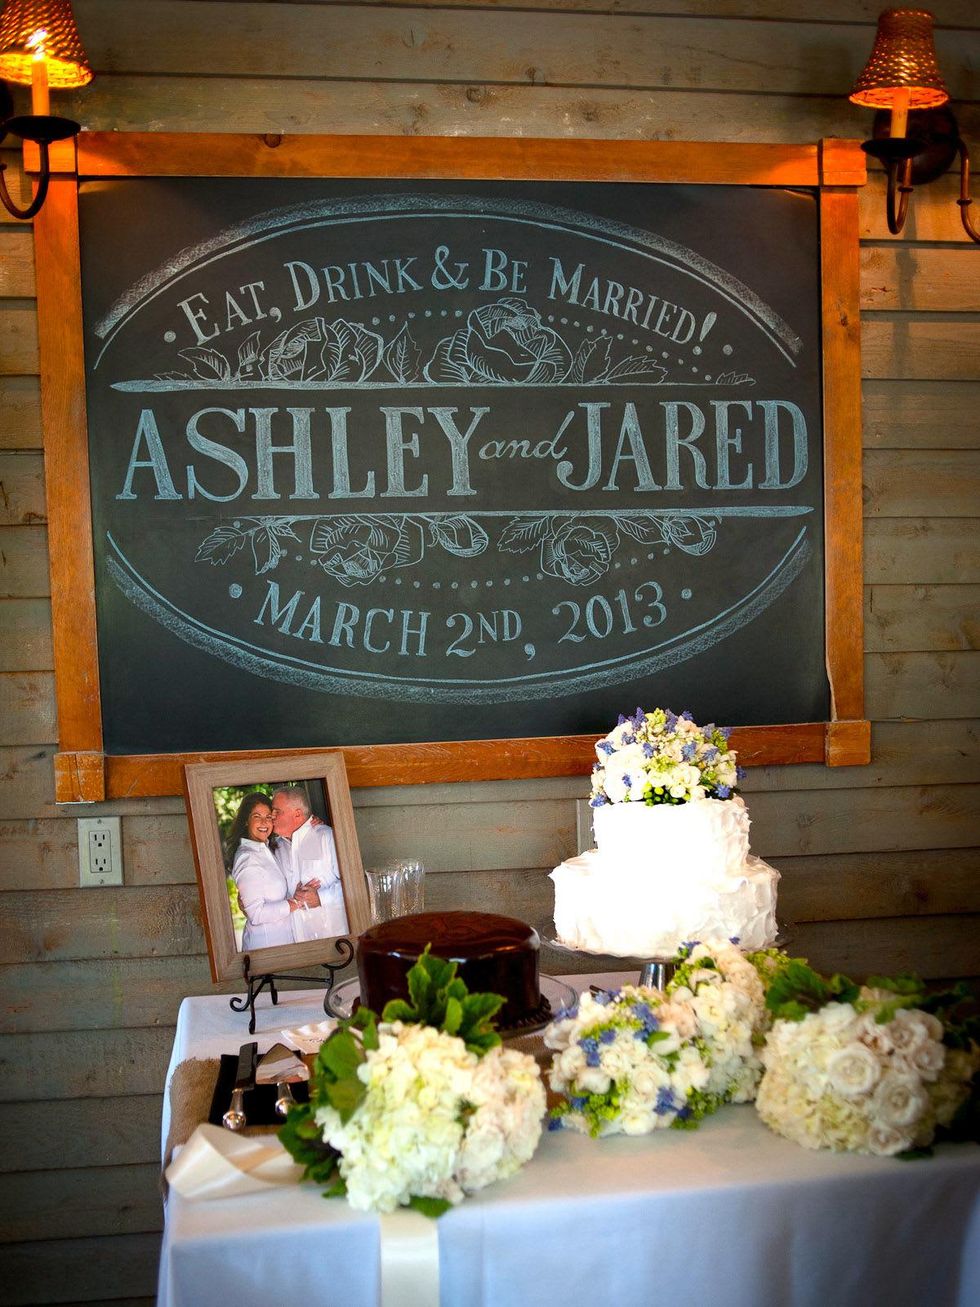 Wonderful Weddings, Wehrly-Kearney, March 2013